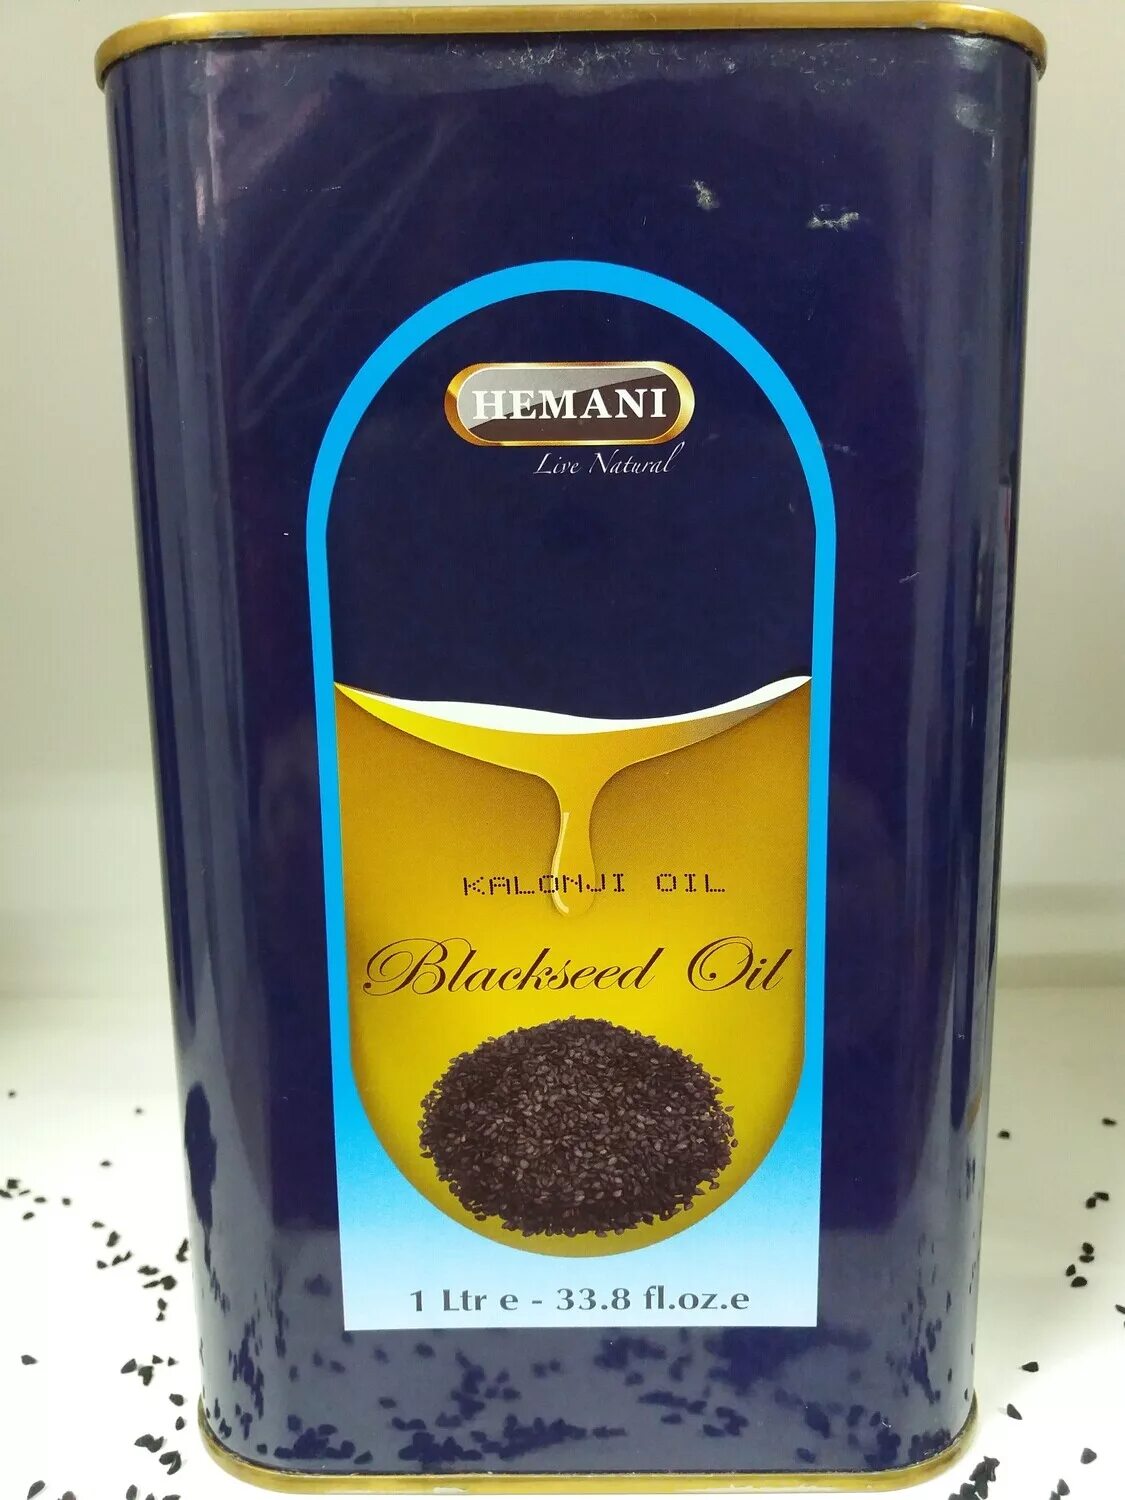 Hemani Black Seed Oil. Черный тмин Хемани. Hemani масло черного тмина. Масло черного тмина Black Seed.